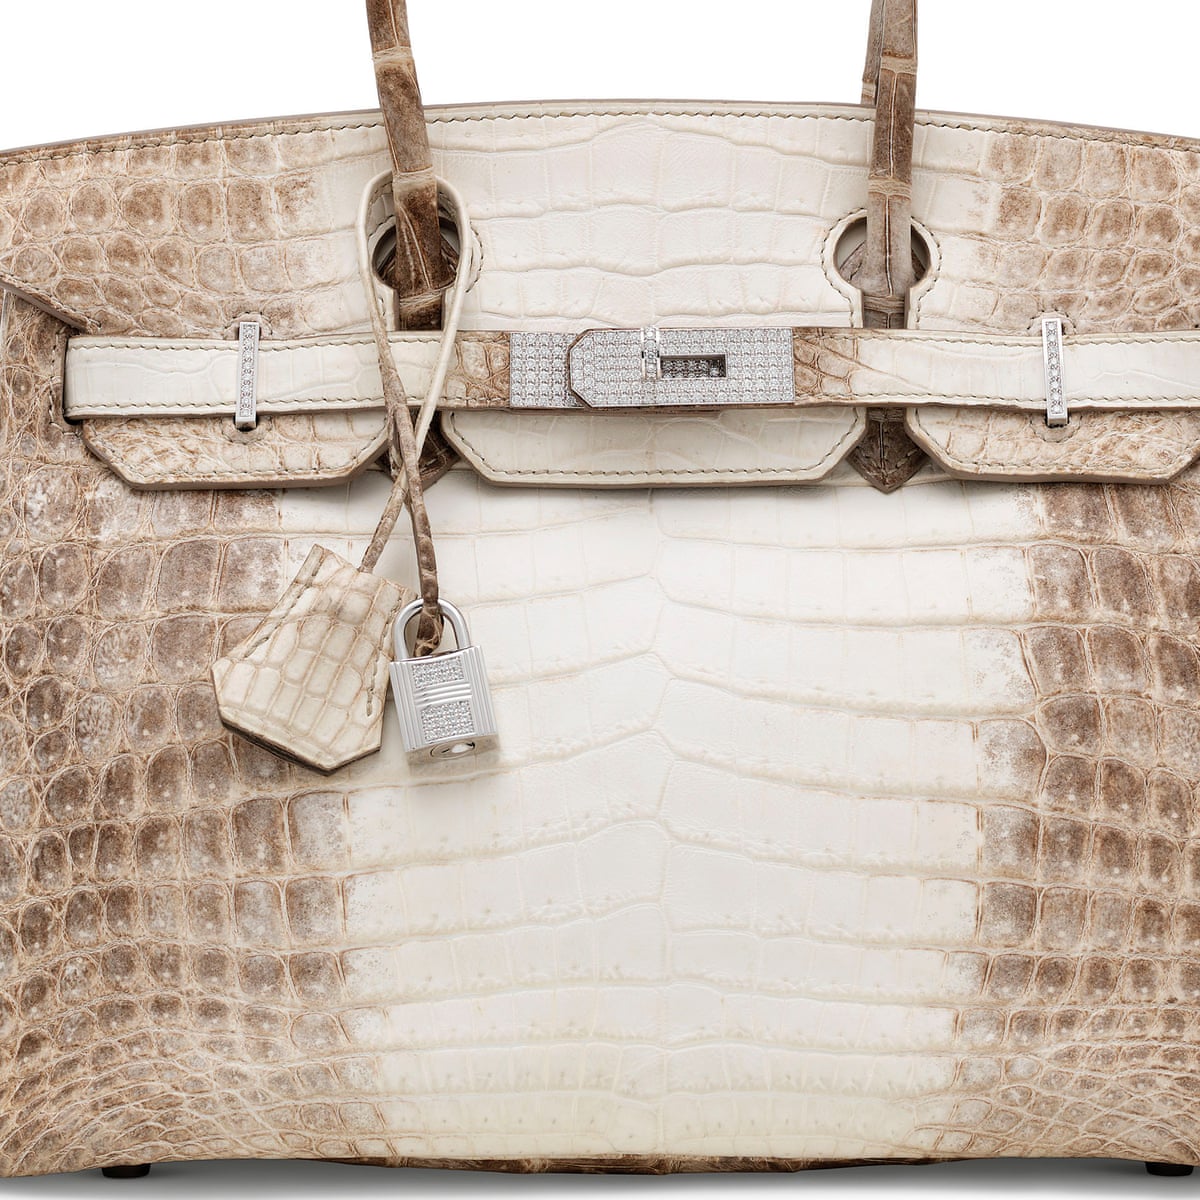 Vintage Hermès Birkin bag sells for record £162,500 in London